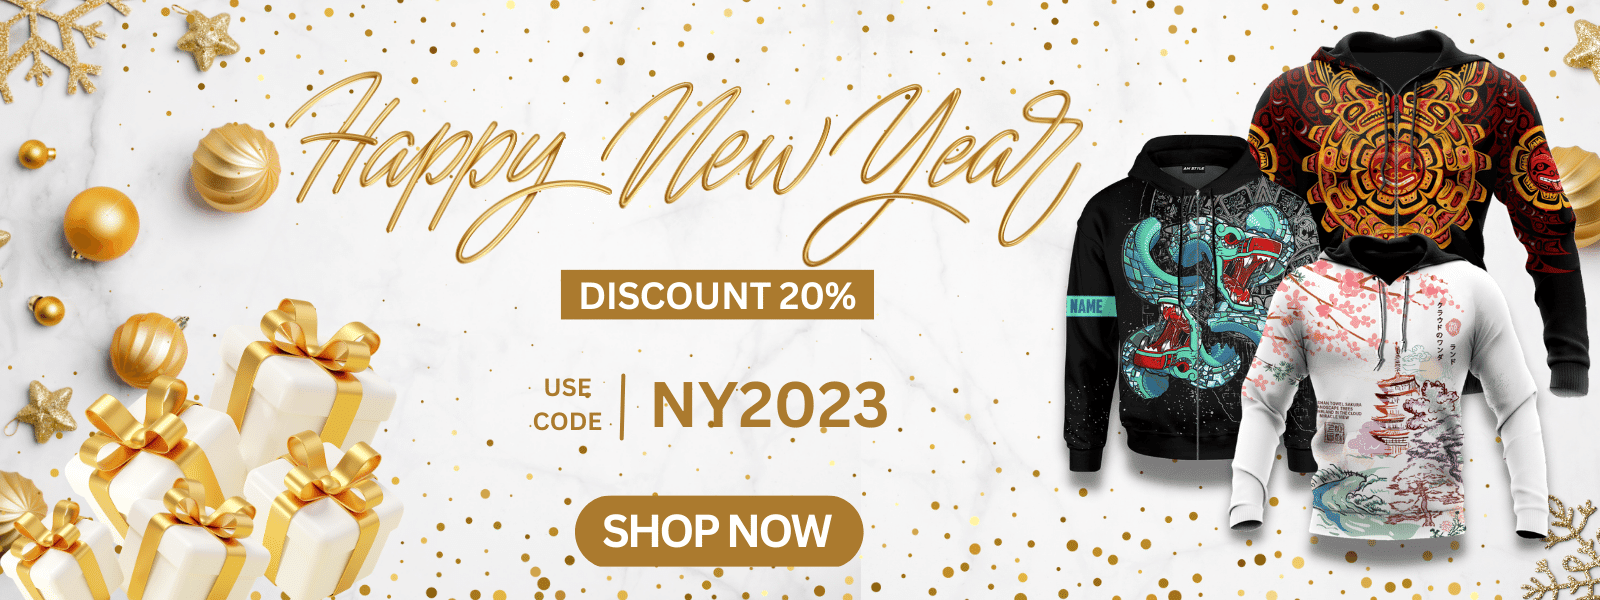 hoodifize-new-year-banner-huge-sale